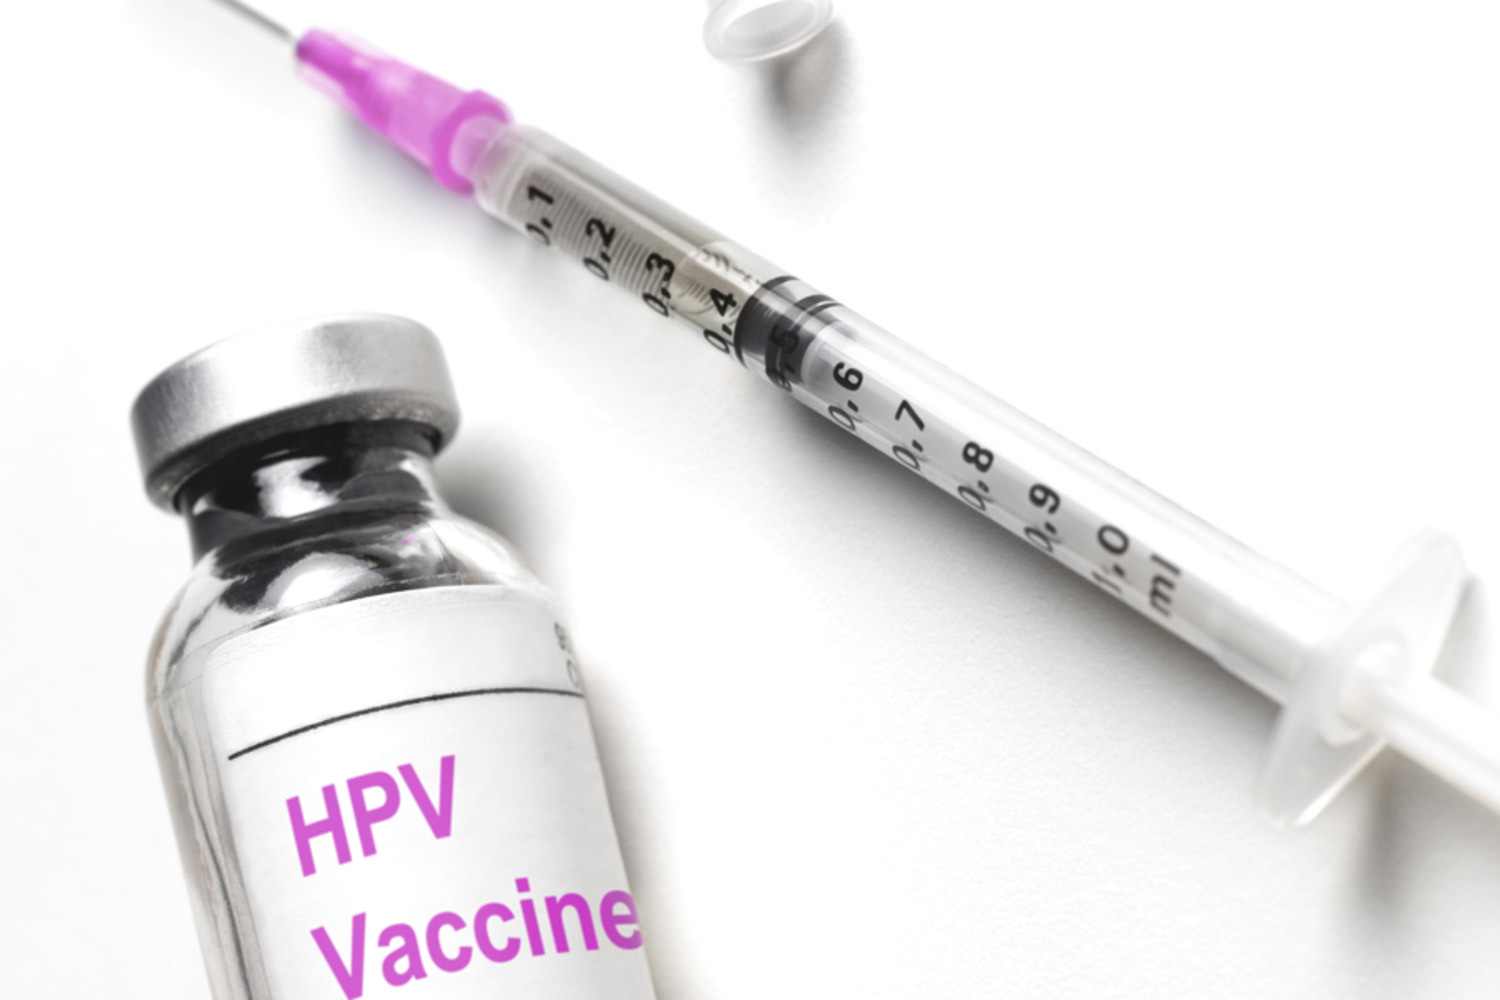 Hpv vaccine pharmacy Hpv vaccine medicine